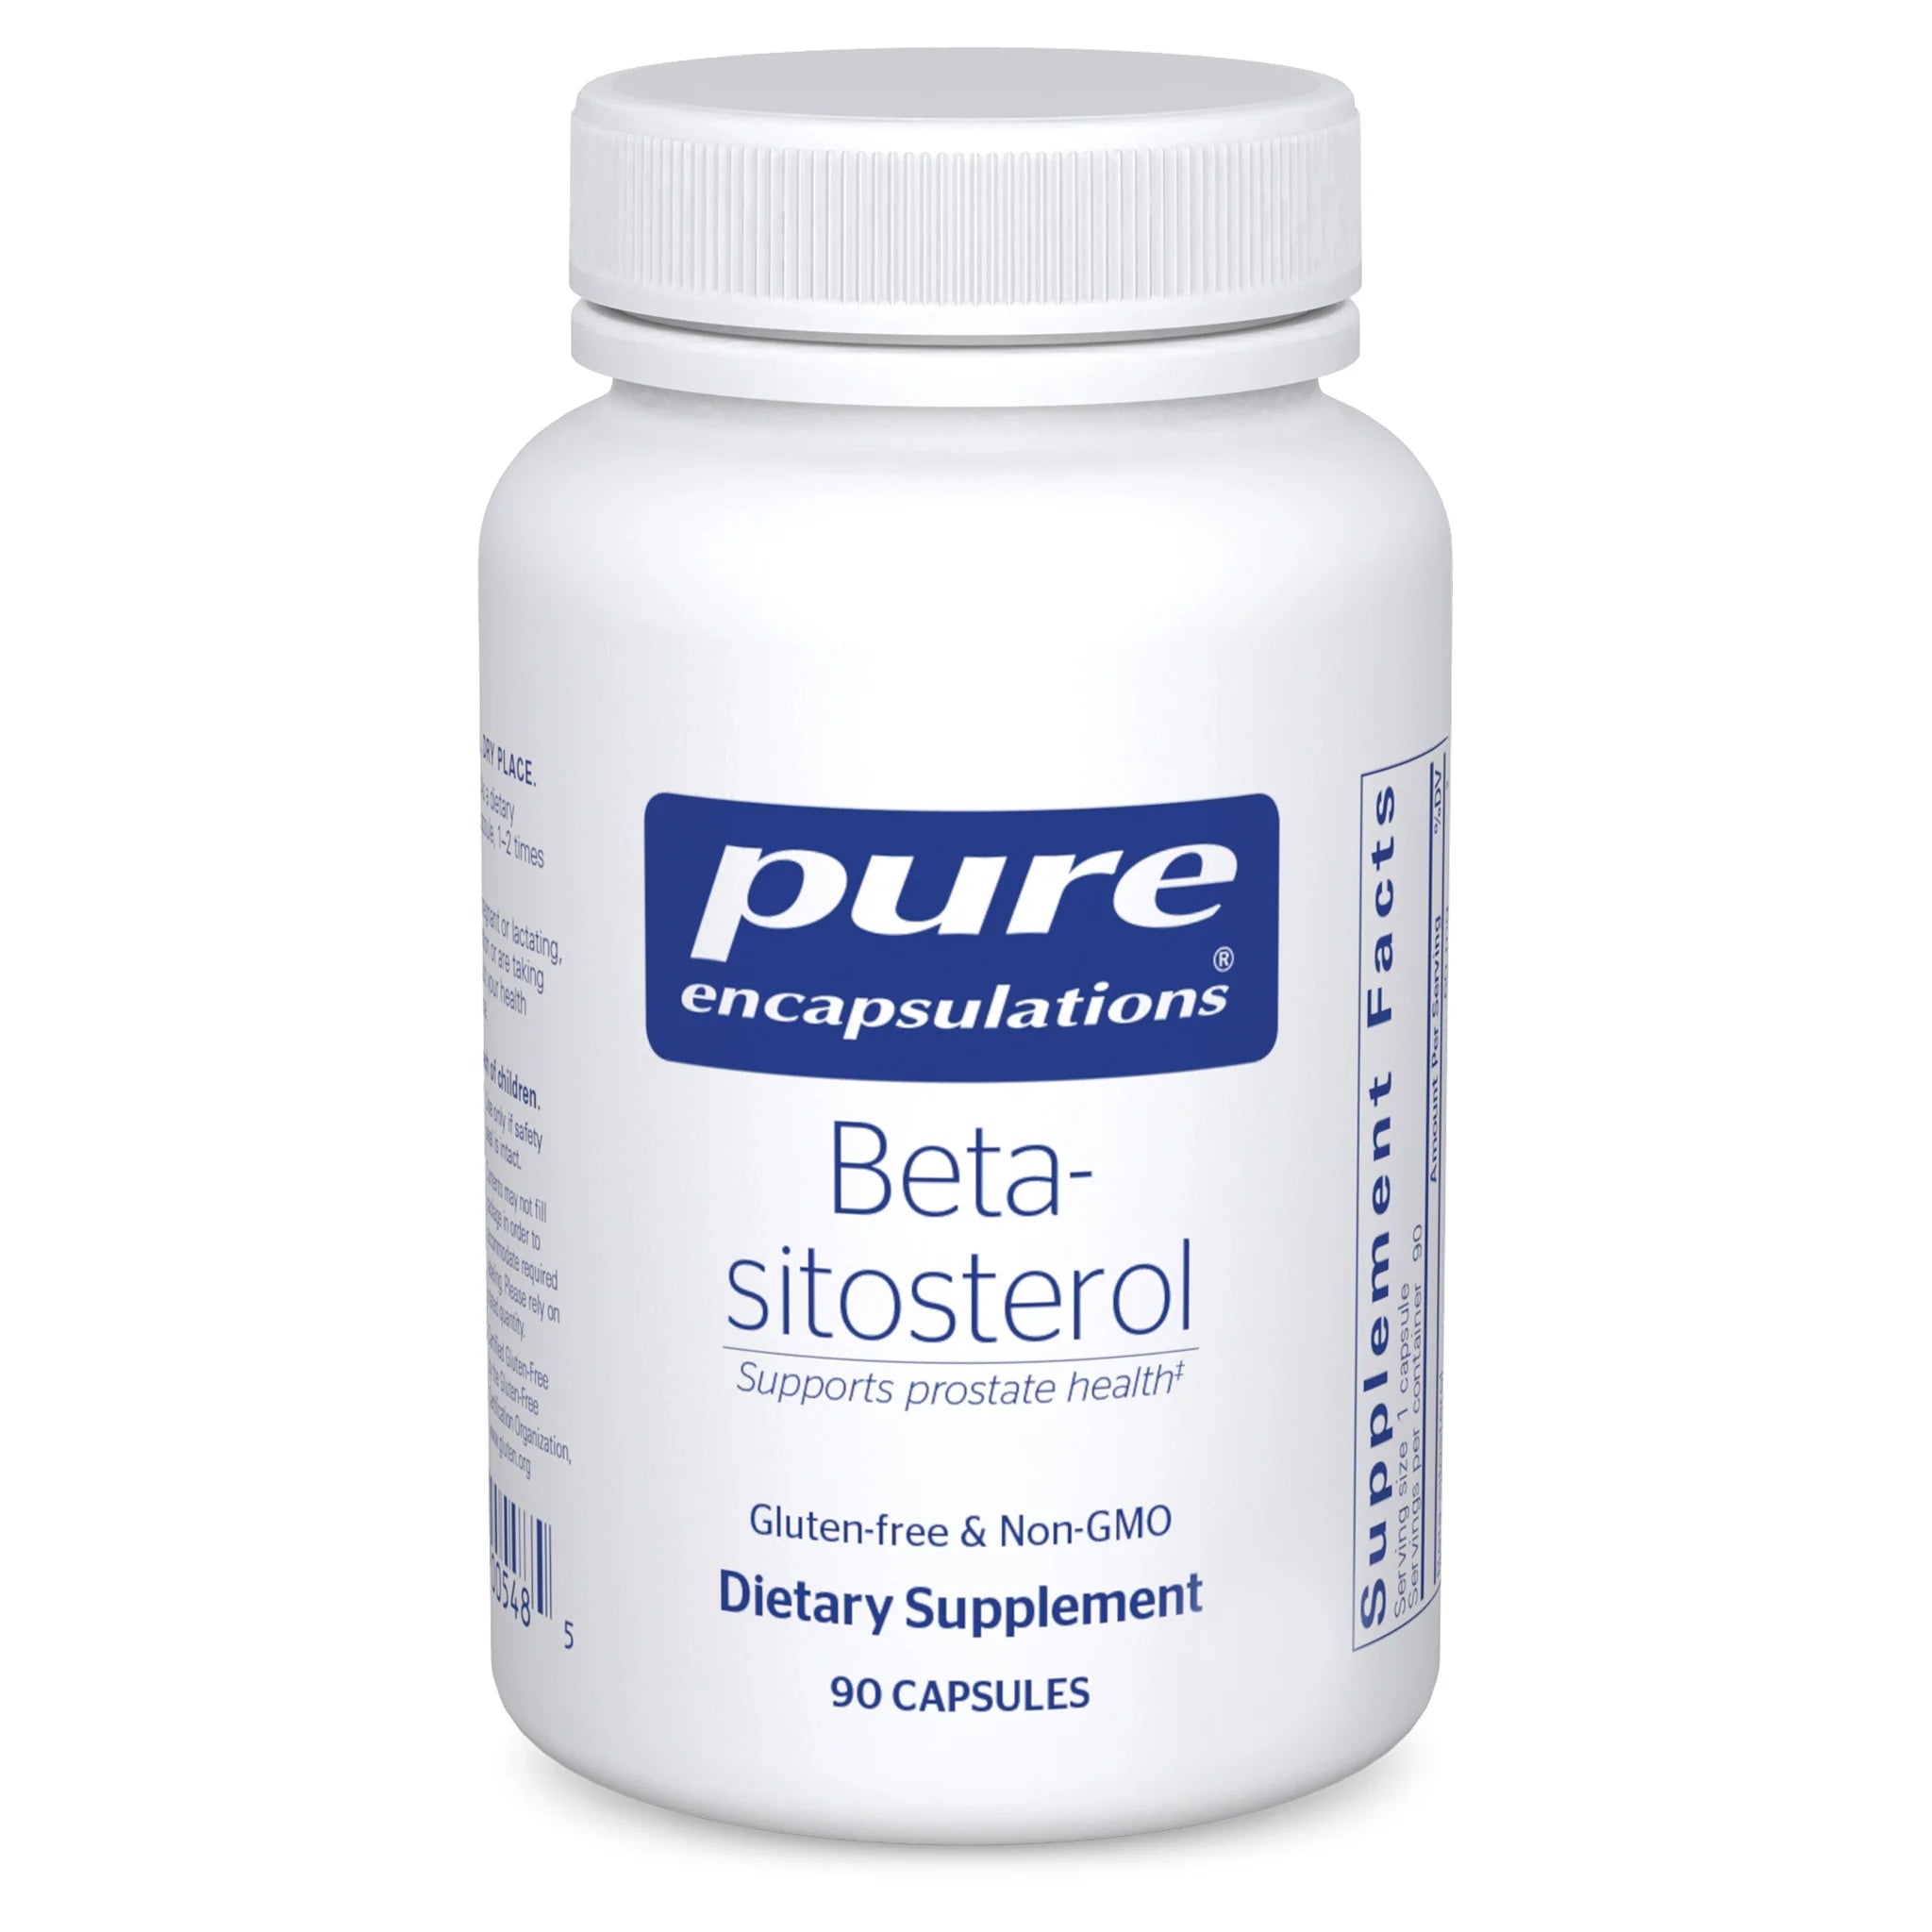 Beta-sitosterol